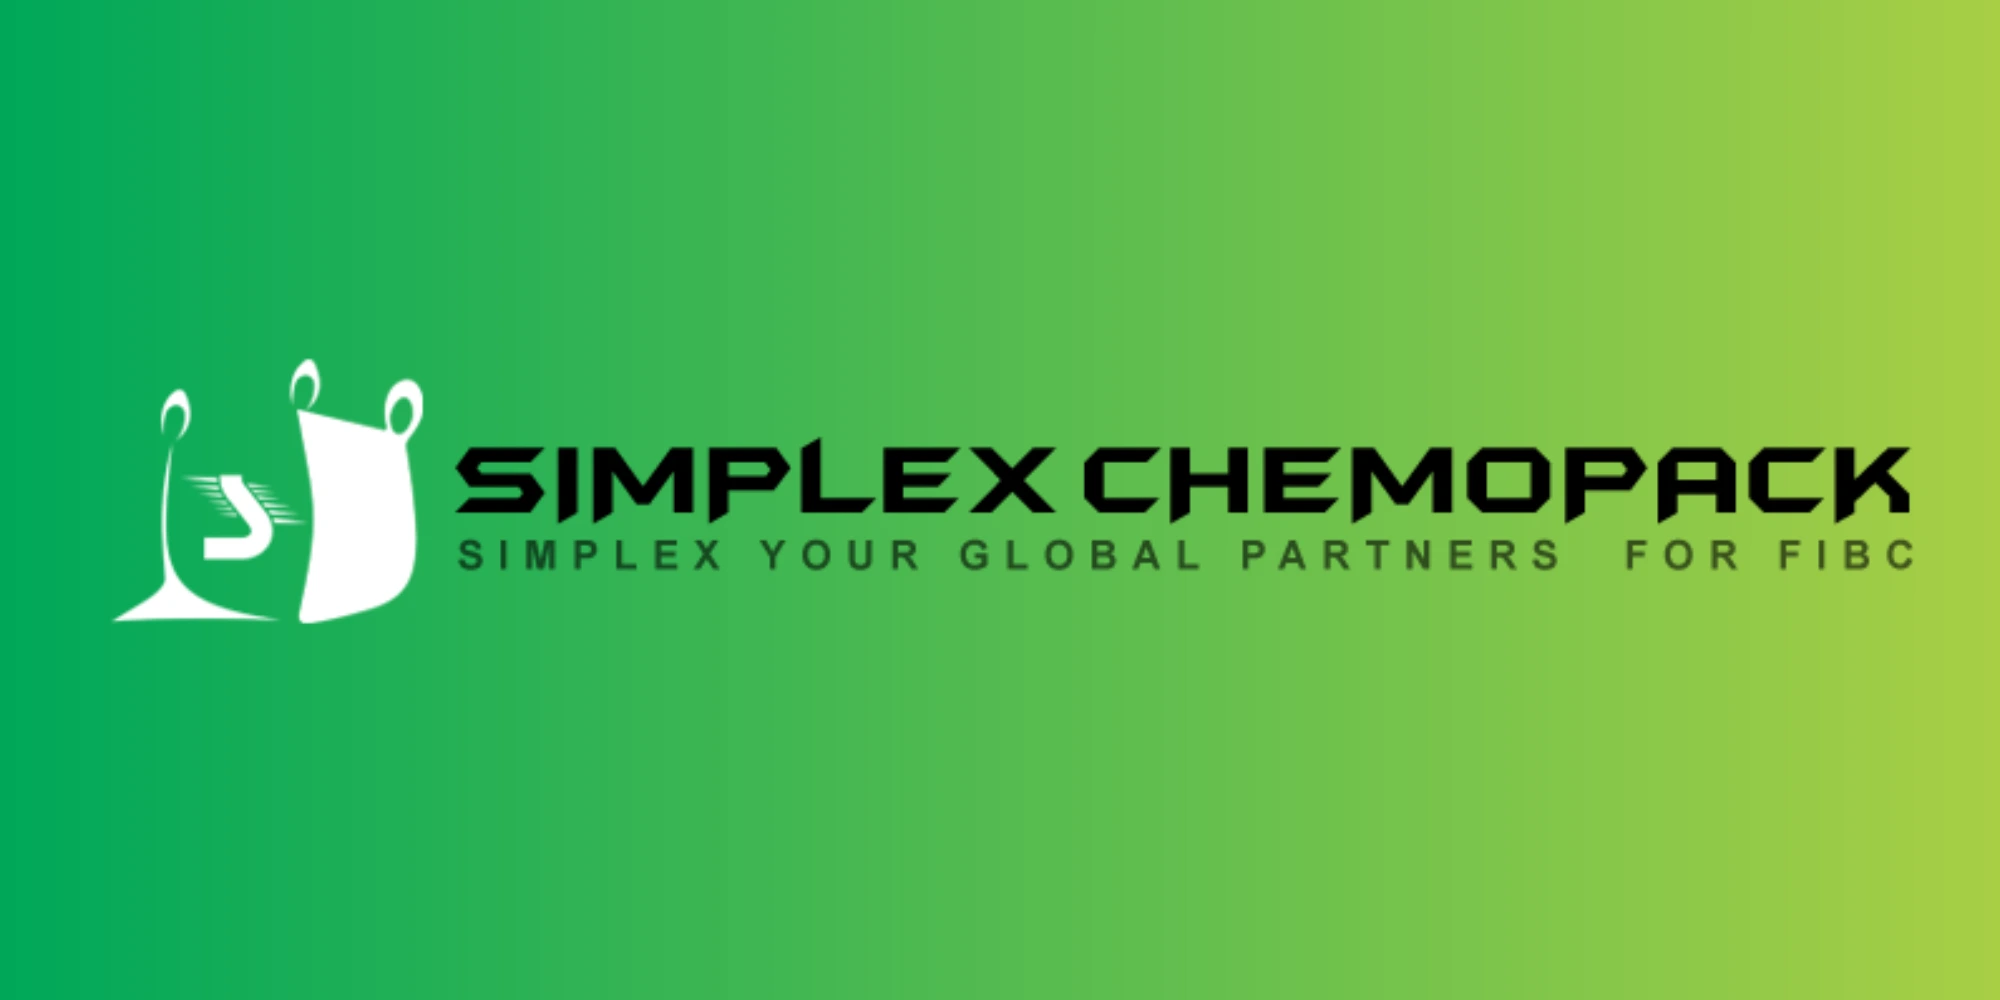 simplex chemopack